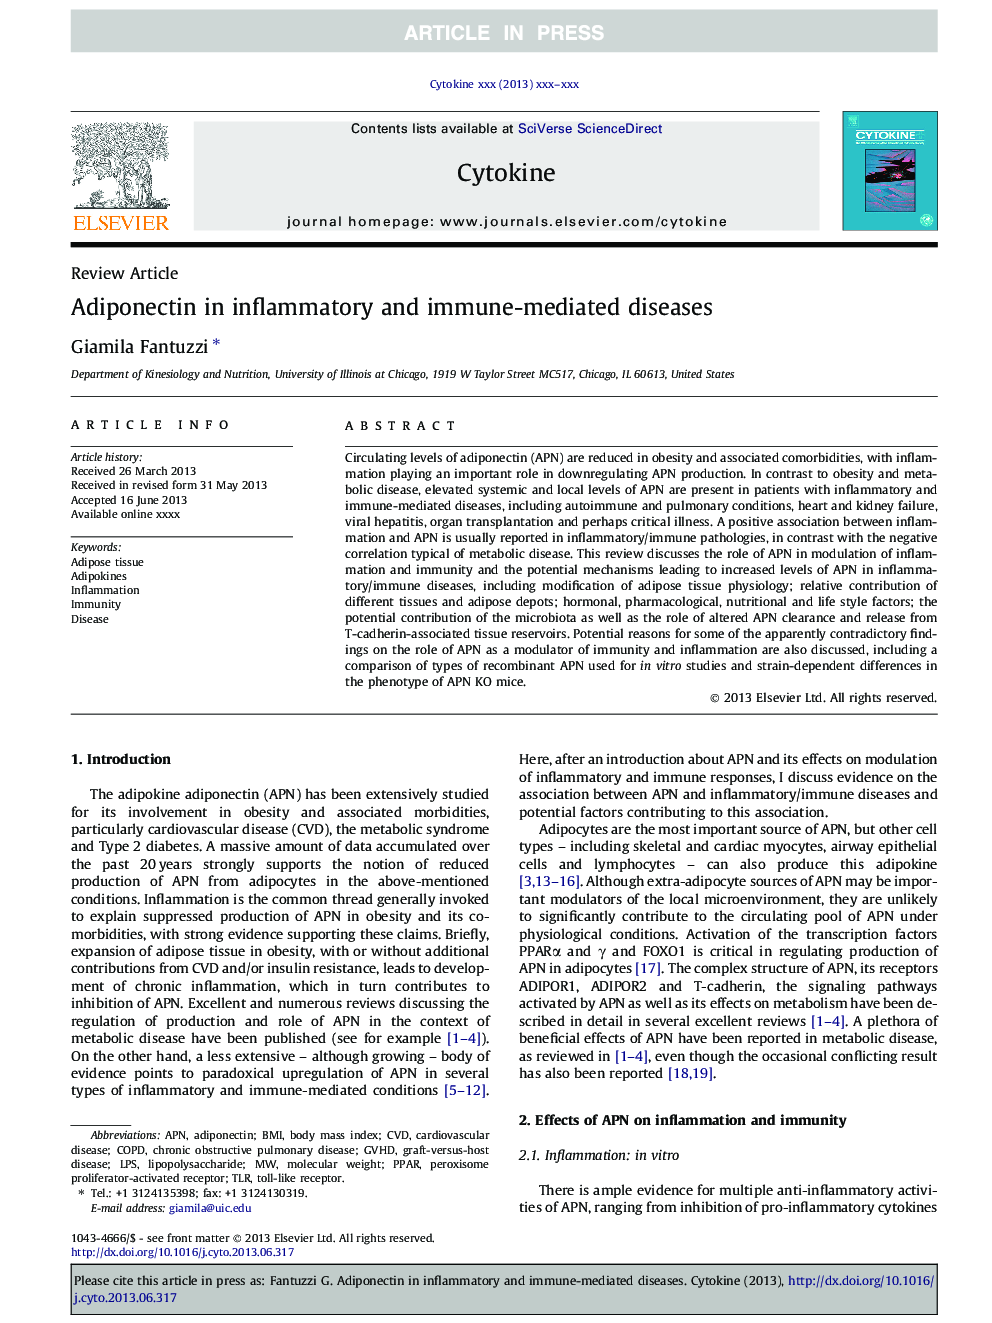 Adiponectin in inflammatory and immune-mediated diseases